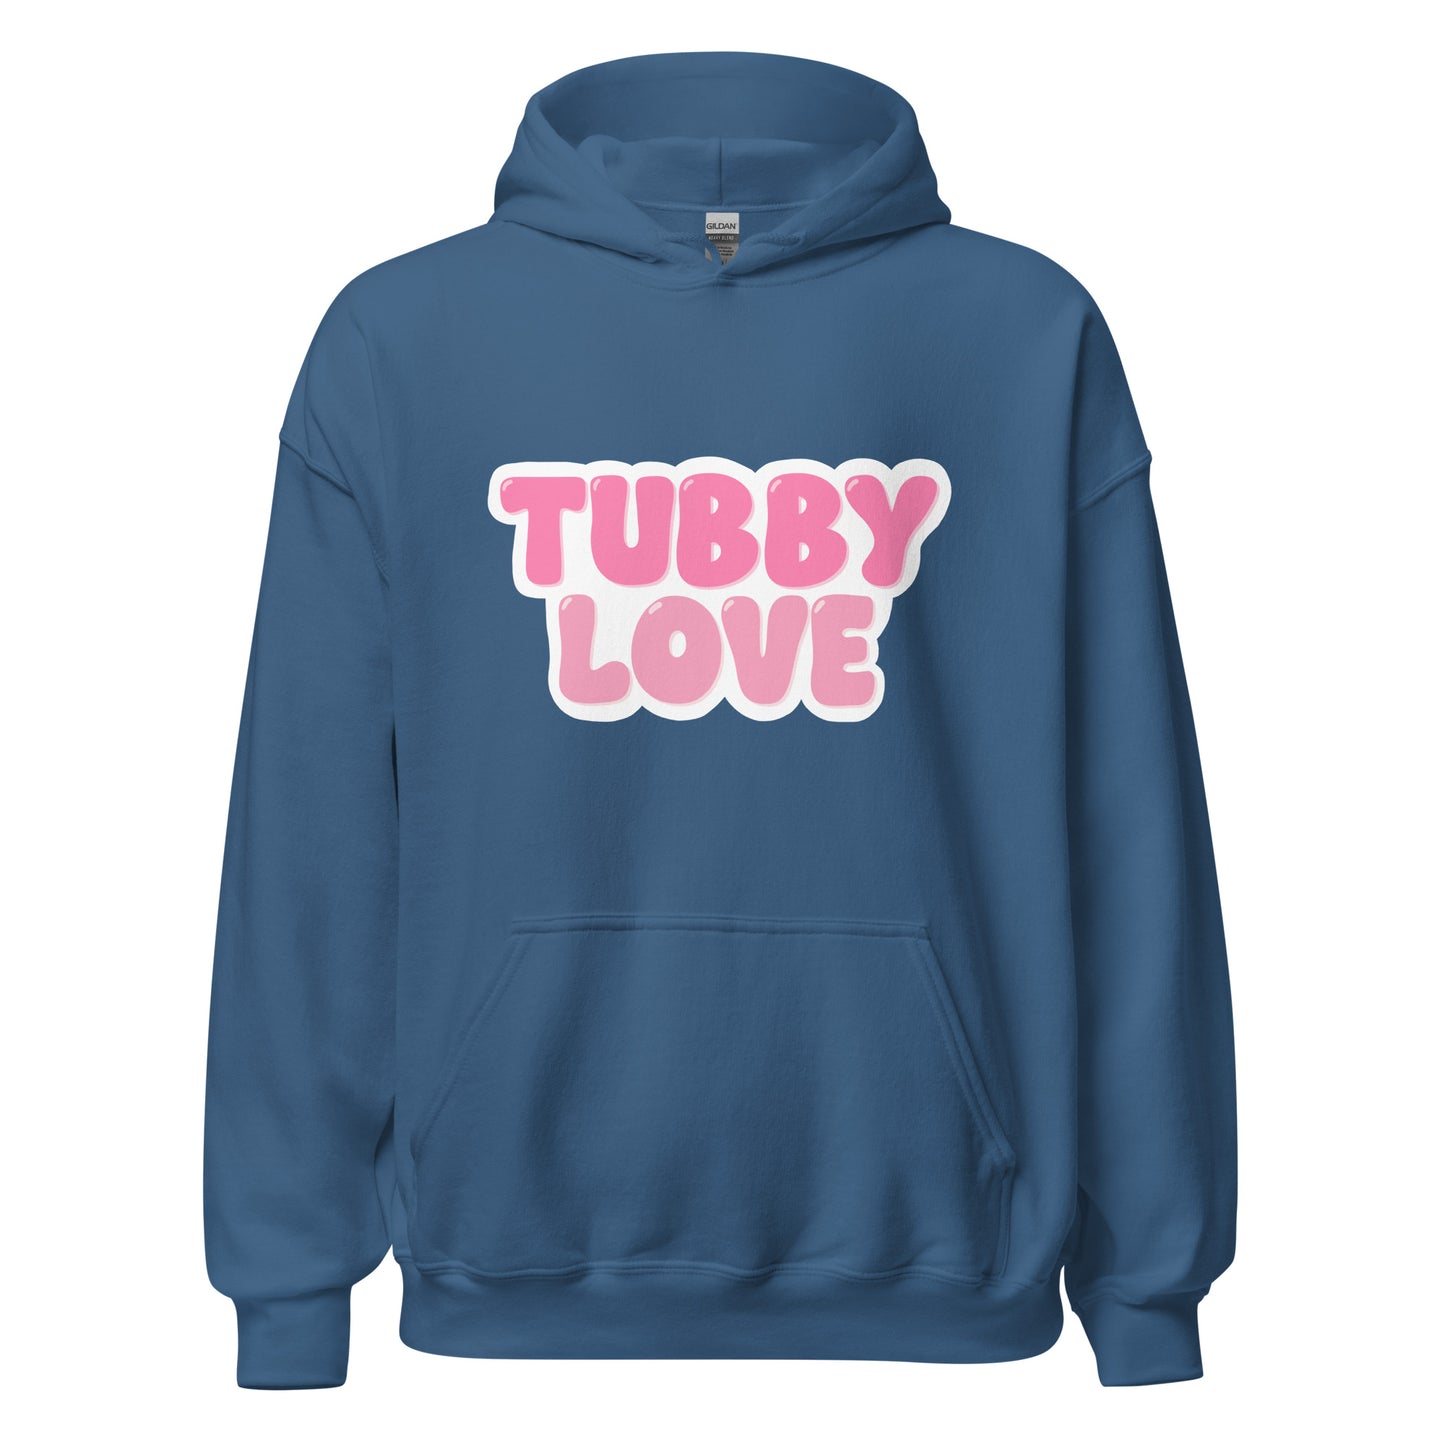 TUBBY LOVE Hoodie Pullover